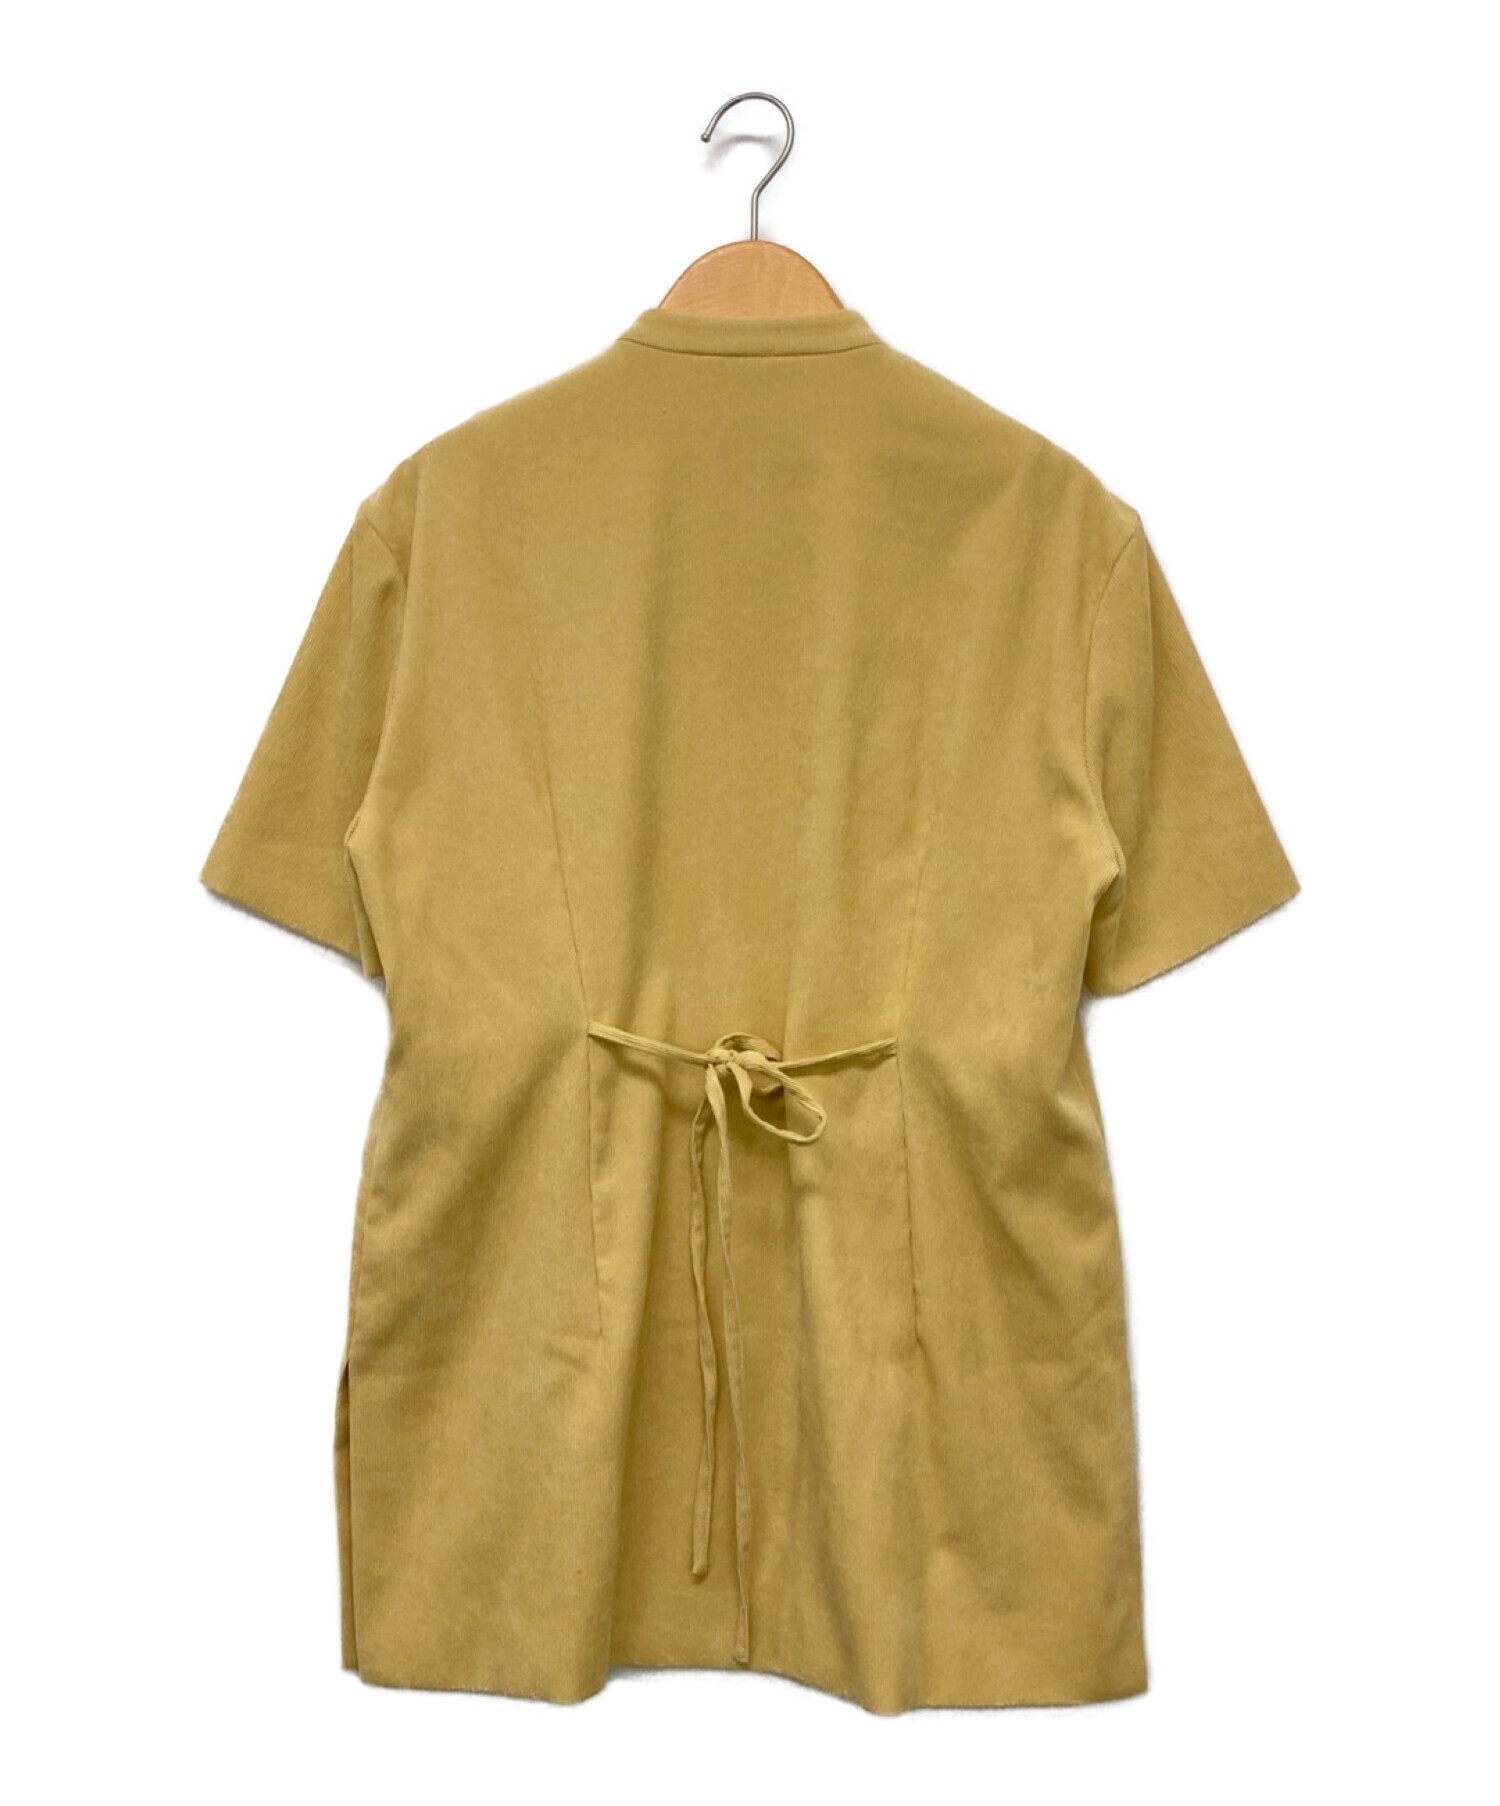 CLANE CORDUROY STAND COLLAR SHIRT 1 S 黄色ジャケット実寸サイズ